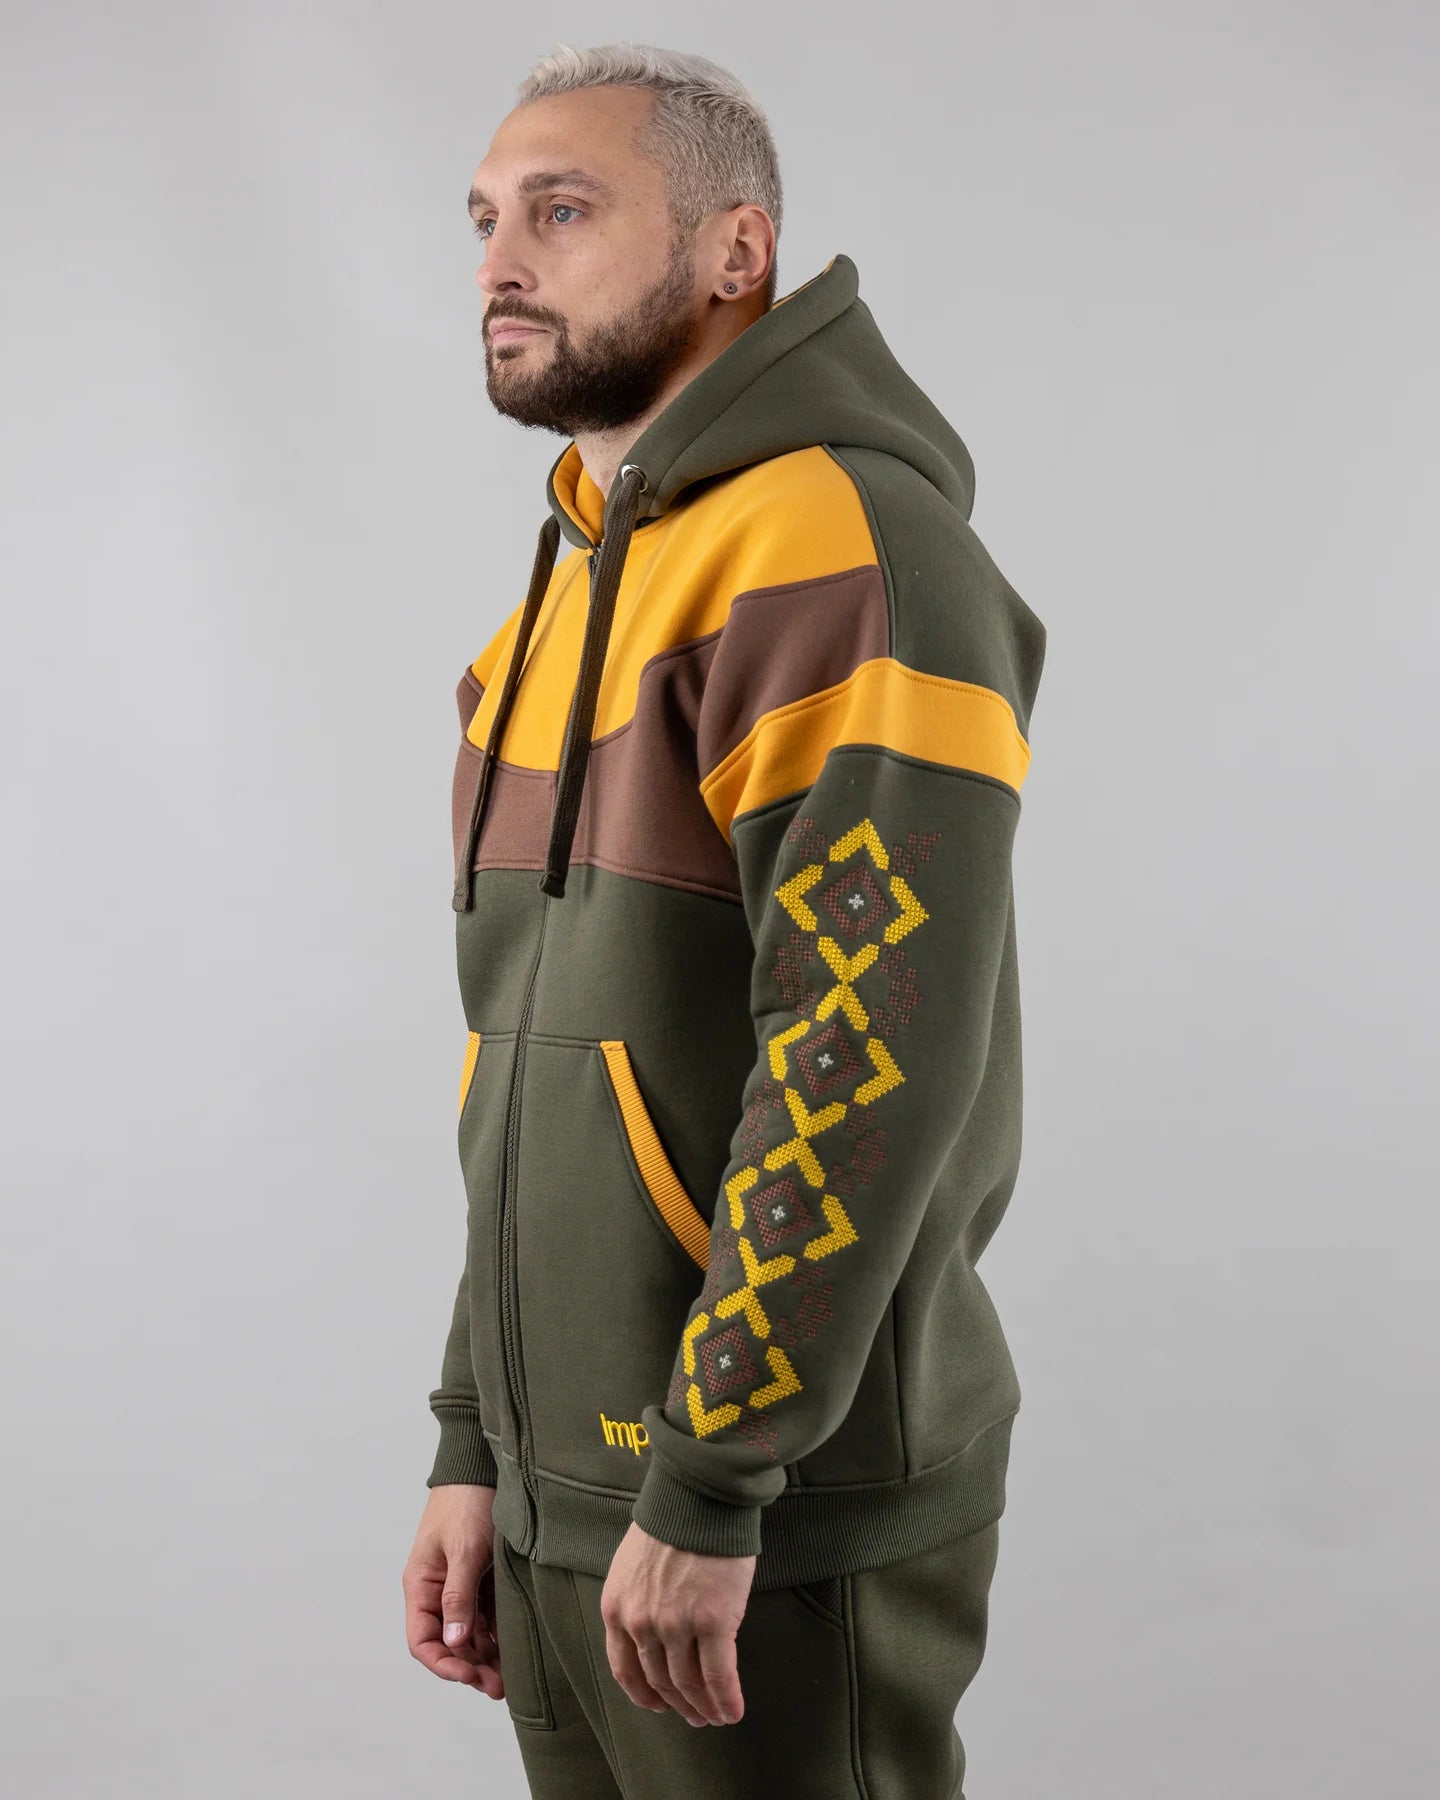 Khaki Zip-up hoodie “Sunrise”, Ukrainian vyshyvanka style